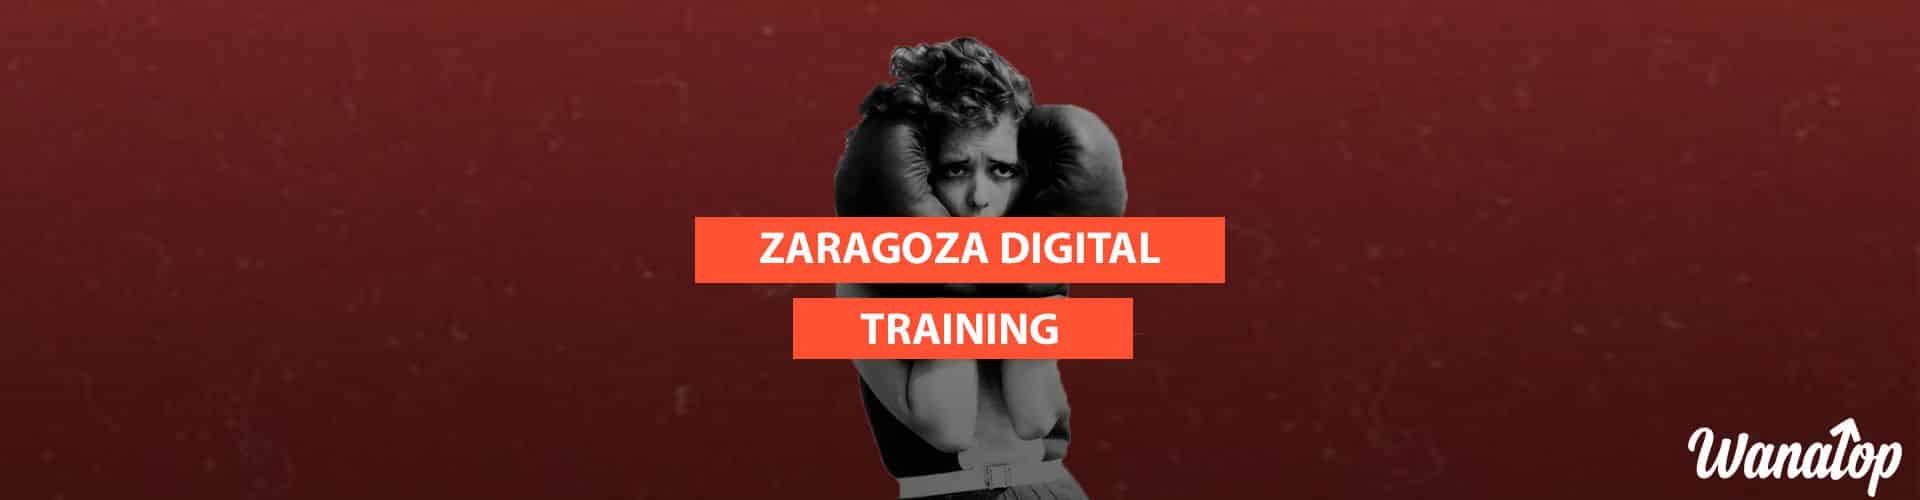 zaragoza digital training Entrénate y digitaliza tu empresa: Únete al Zaragoza Digital Training